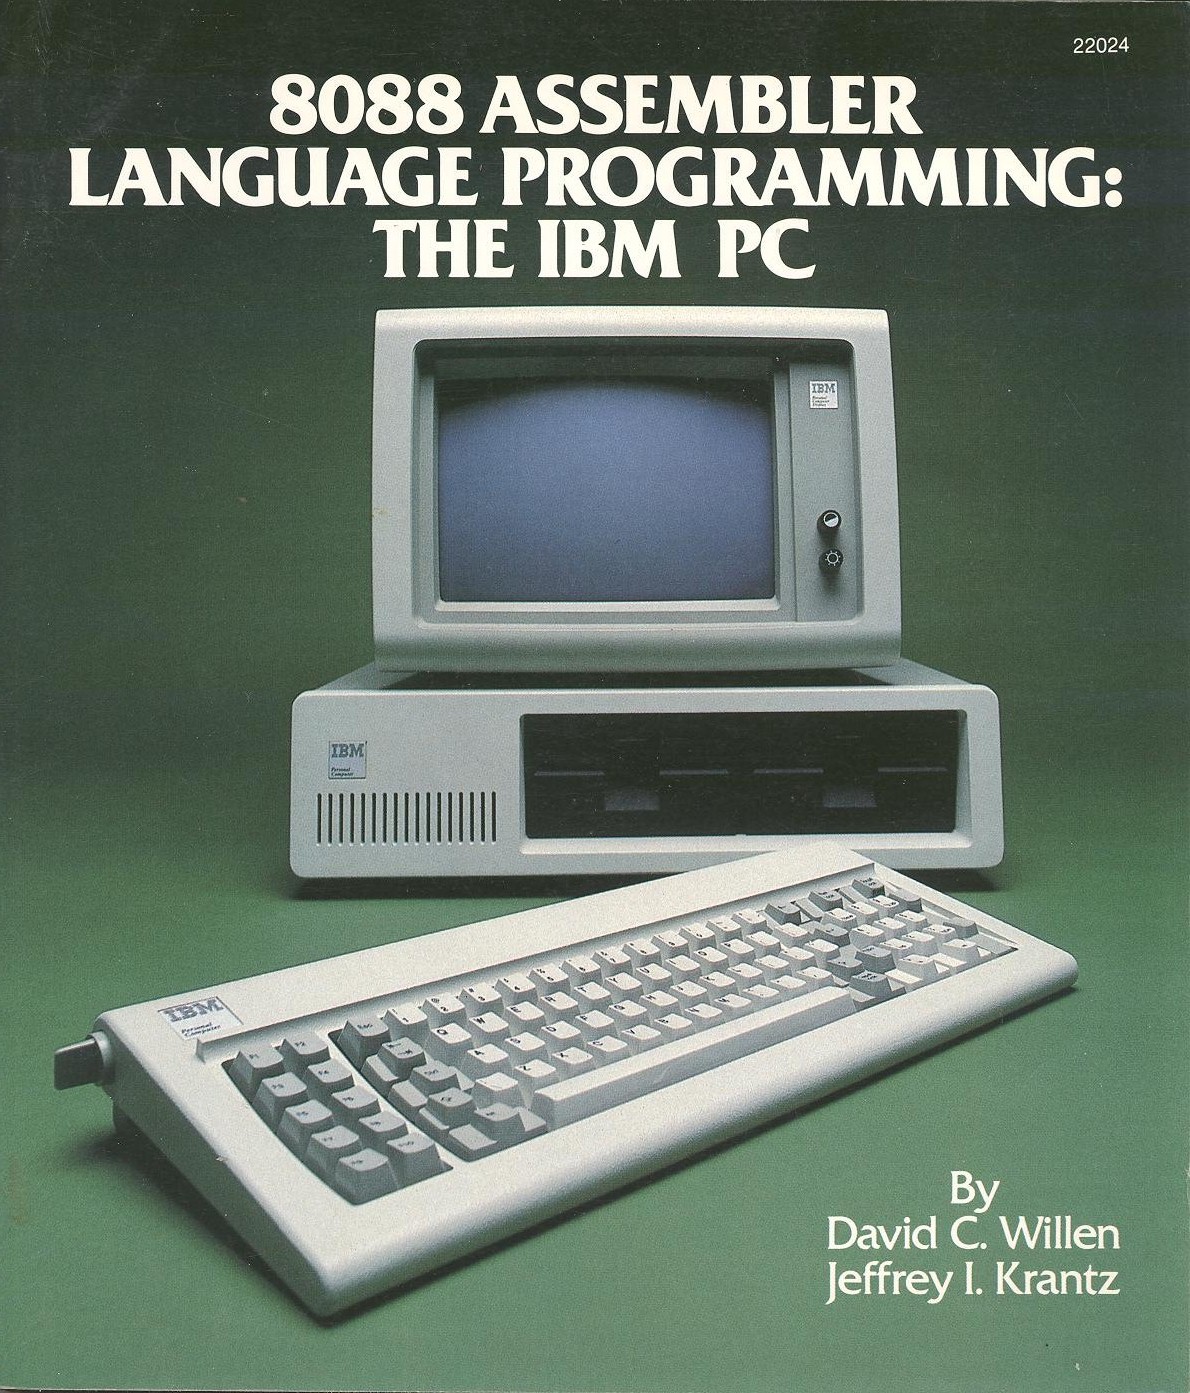 8088 Assembler Language Programming The IBM PC by Willen, David C